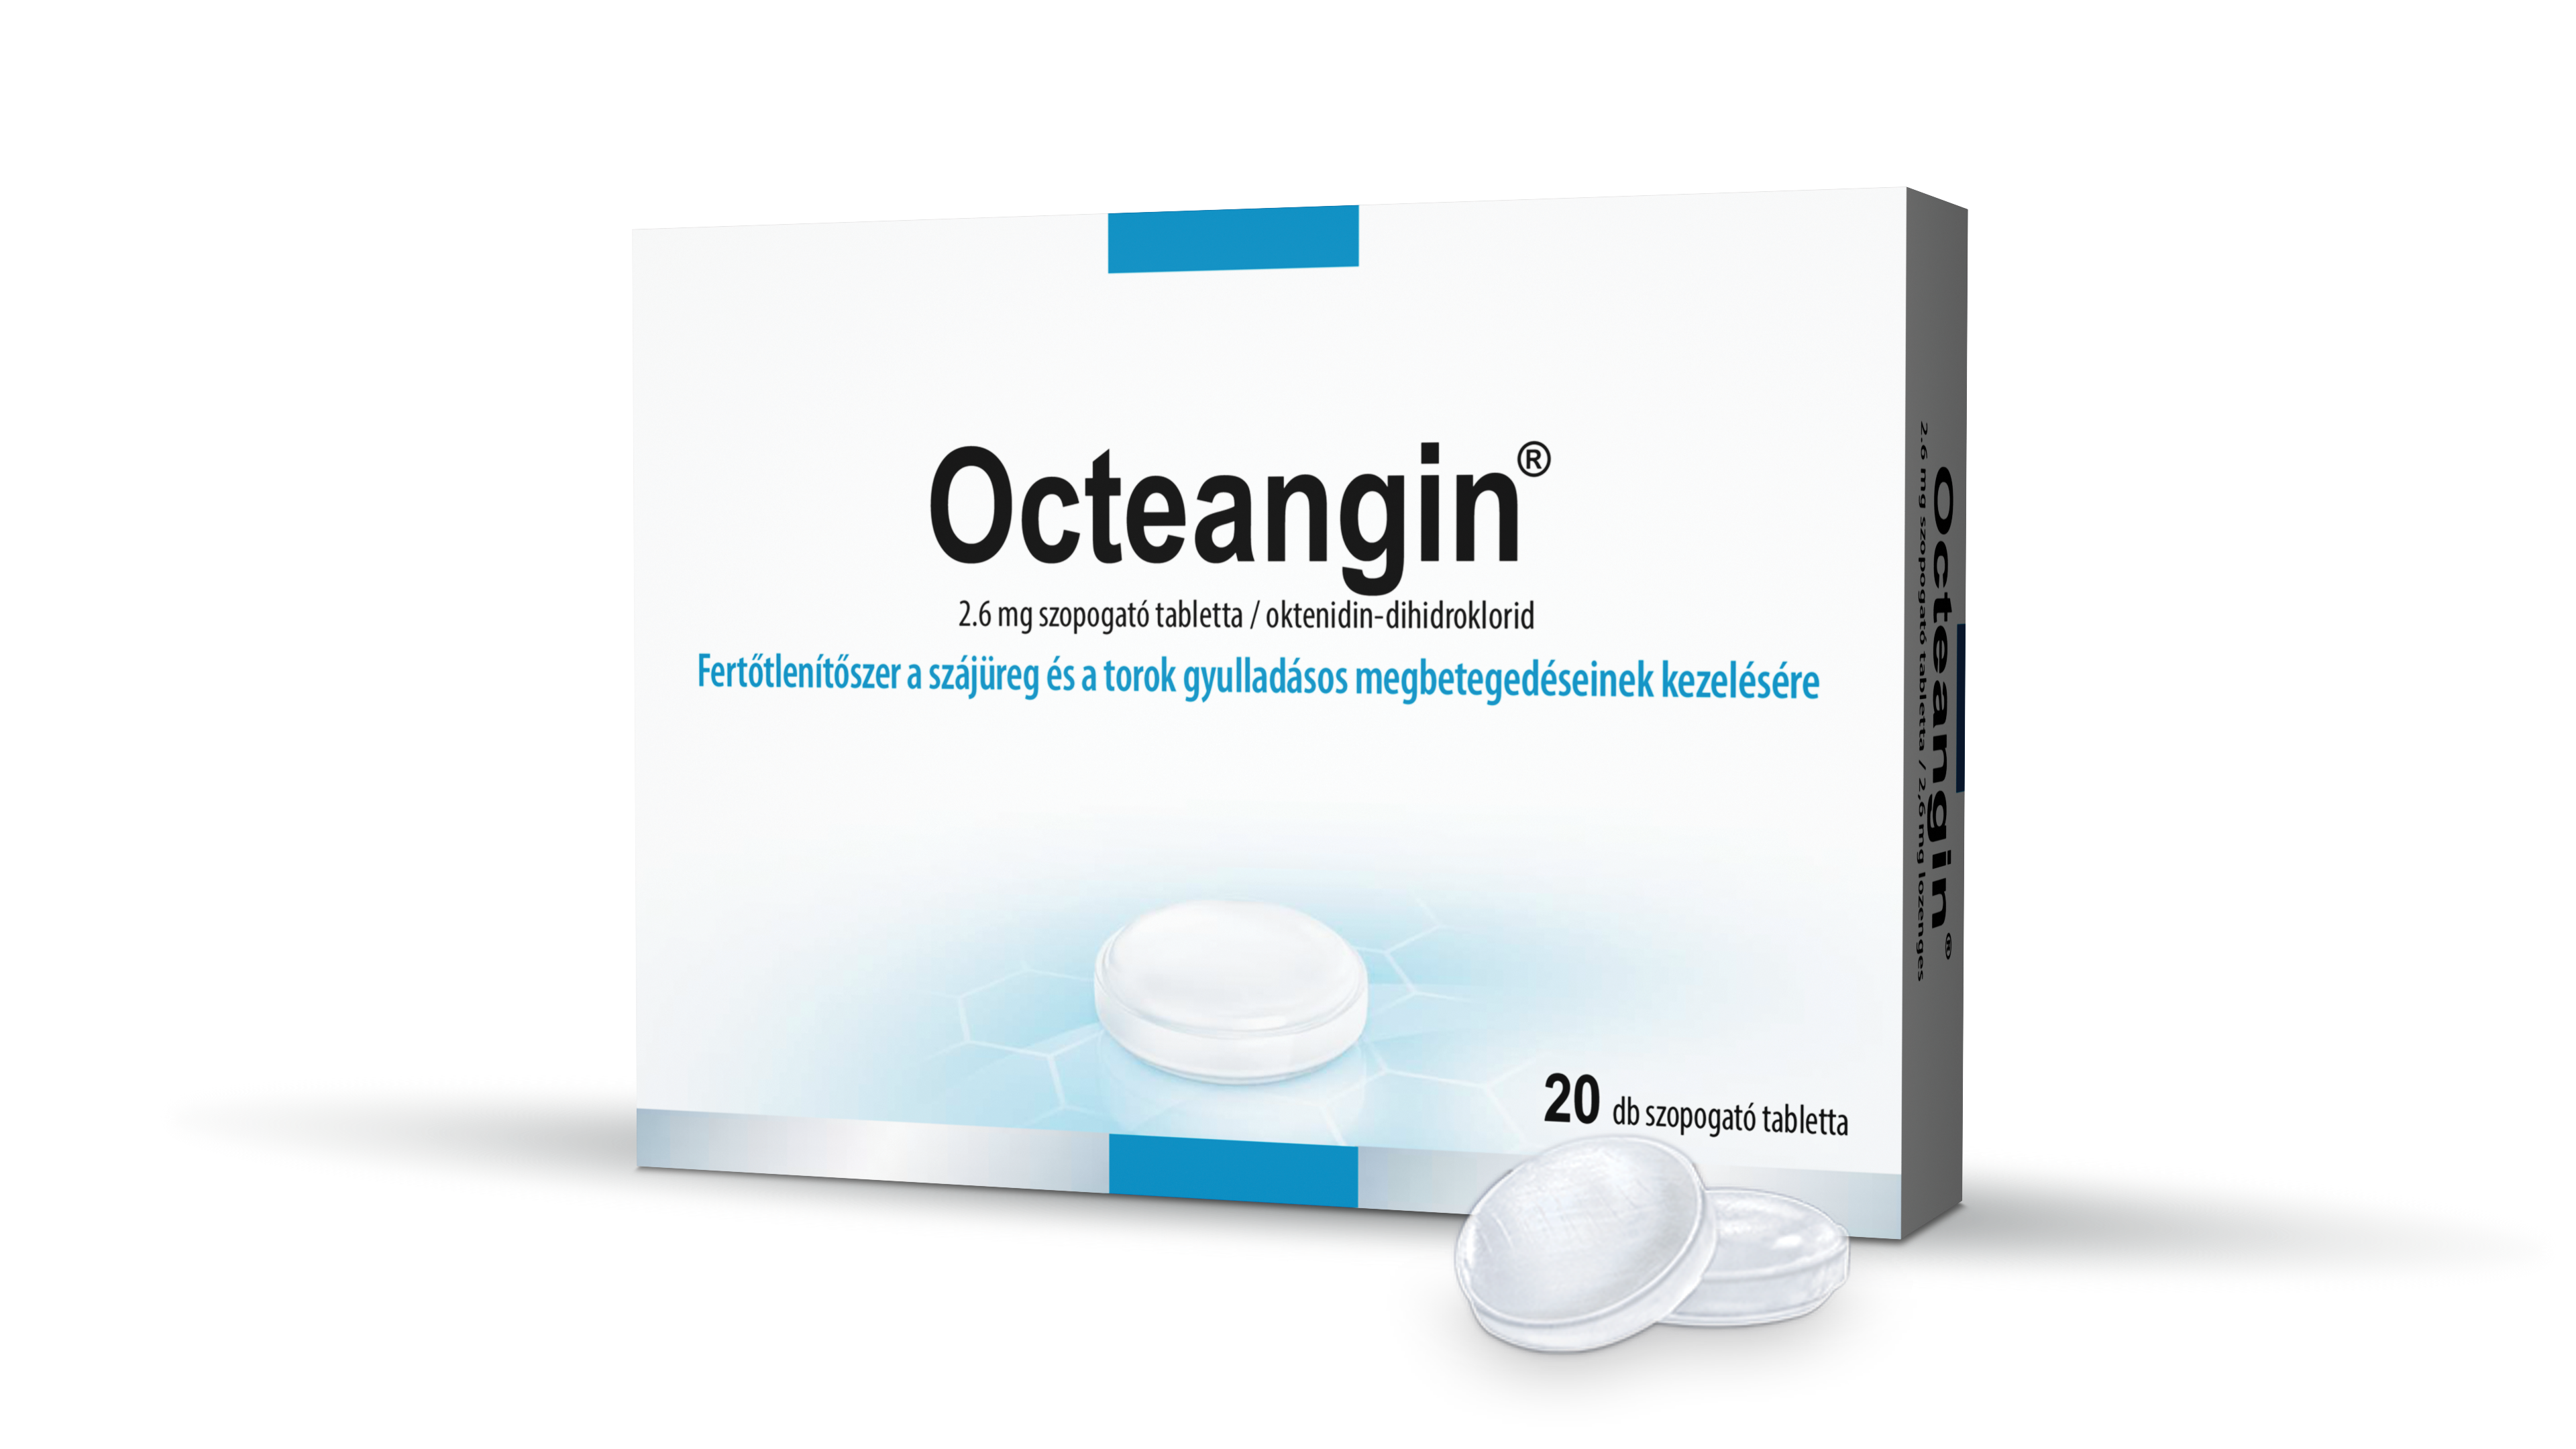 Octeangin 2,6 mg szopogató tabletta